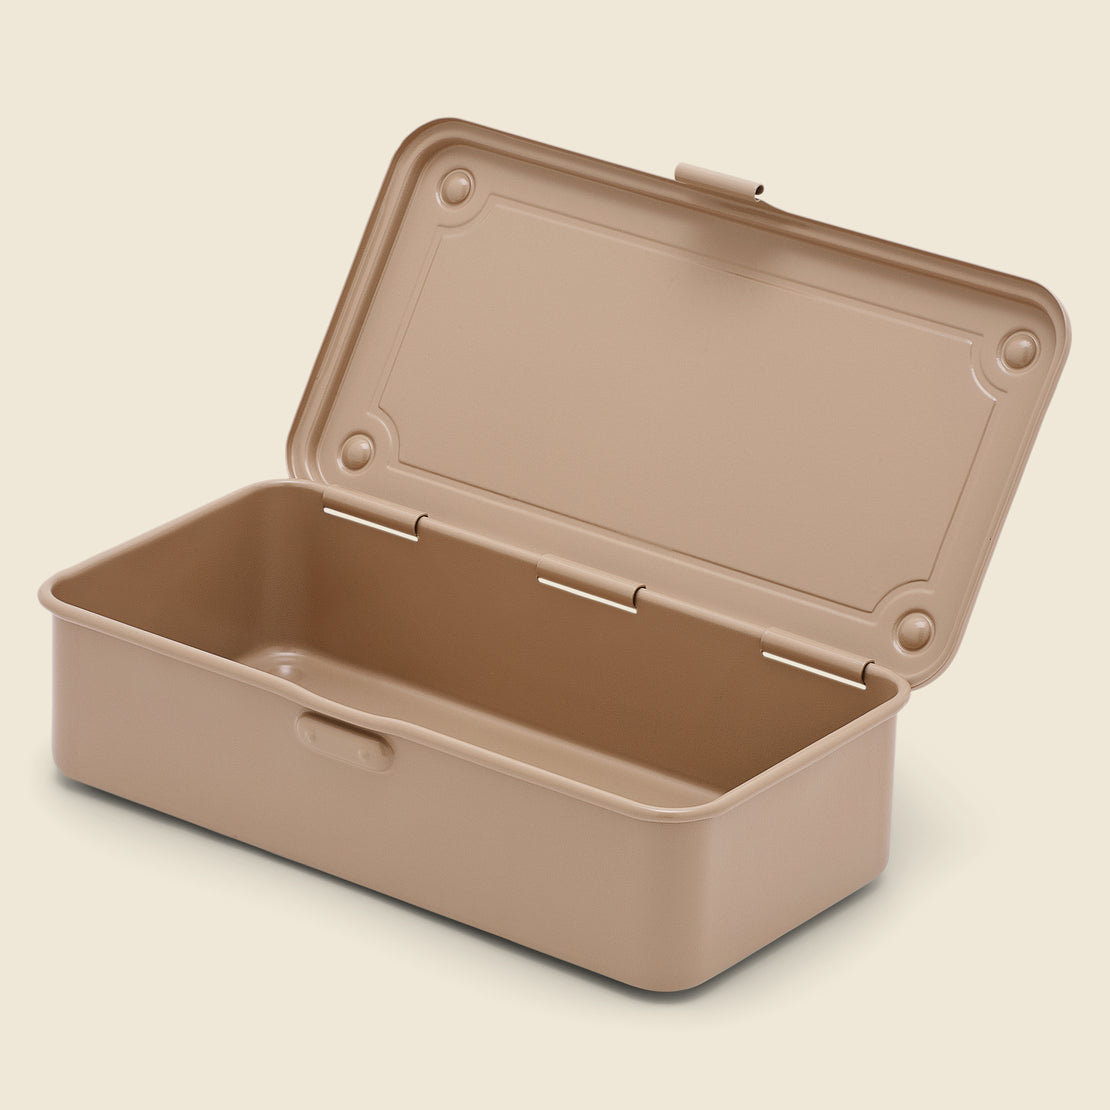 Stackable Storage Box - Beige - Home - STAG Provisions - Home - Kitchen - Storage